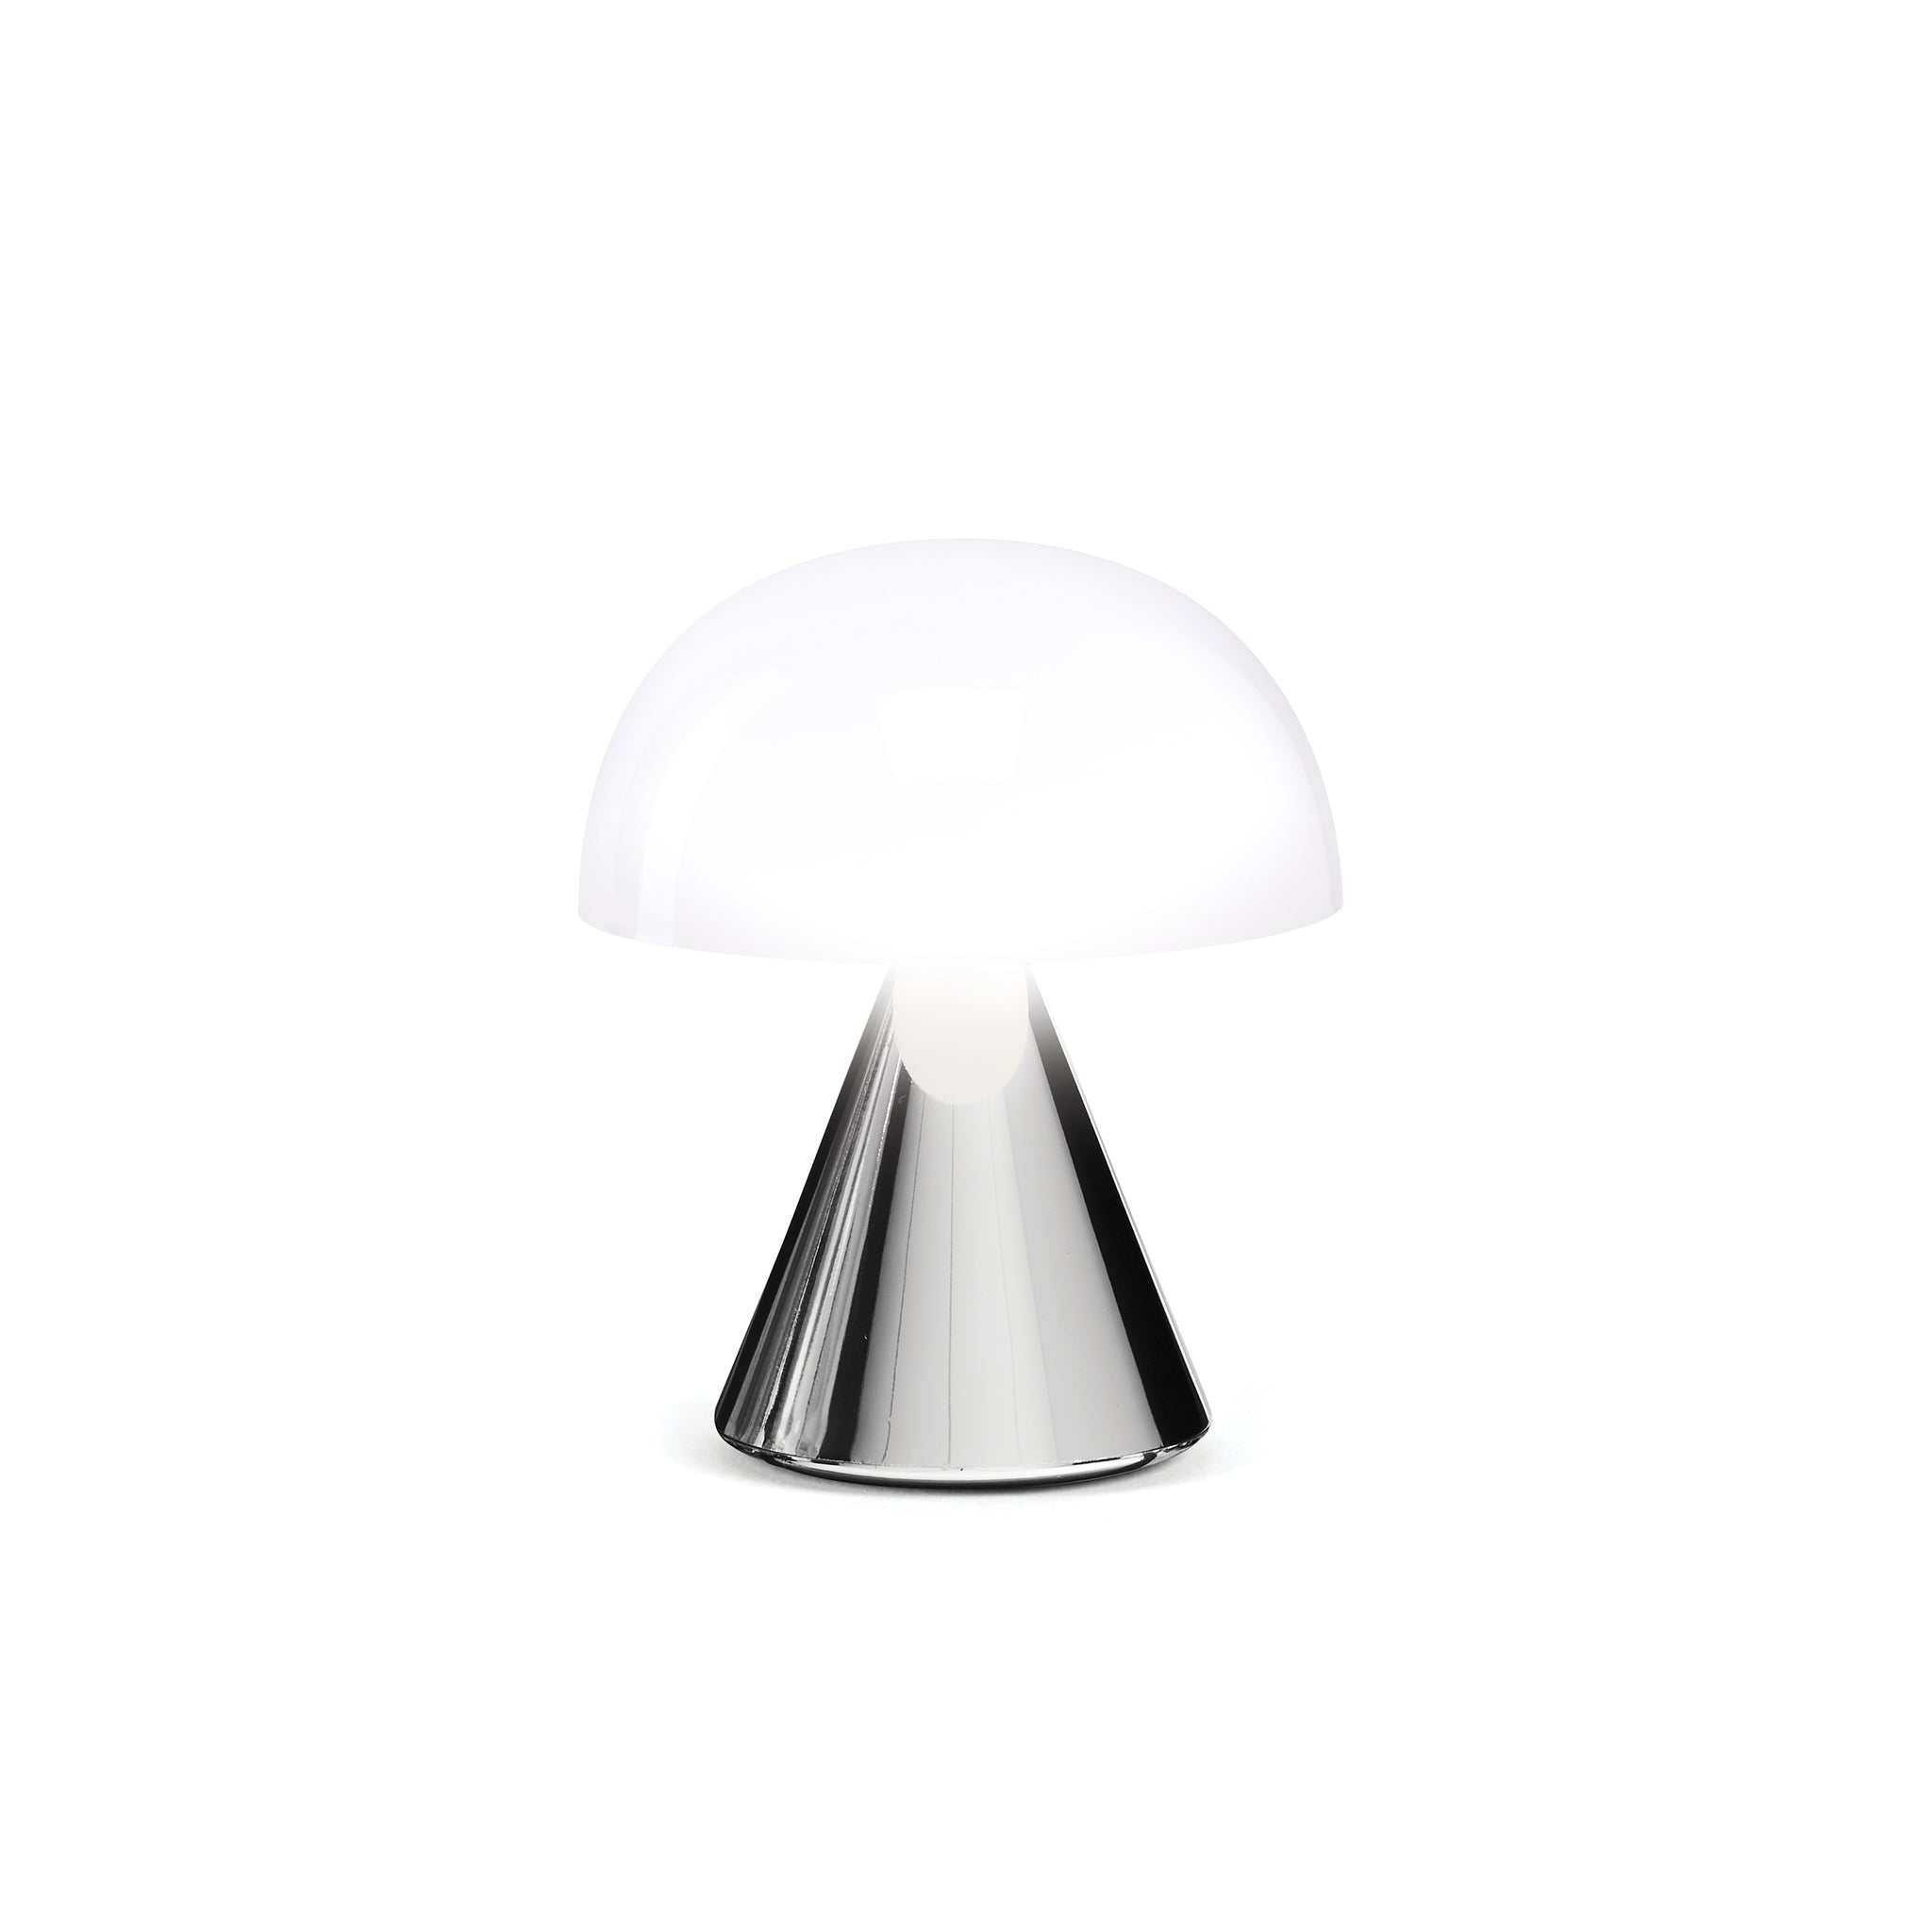 Lexon Mina Small Metallic Gold│Oplaadbare LED-lamp│art. LH60MC│vooraanzicht met wit licht aan